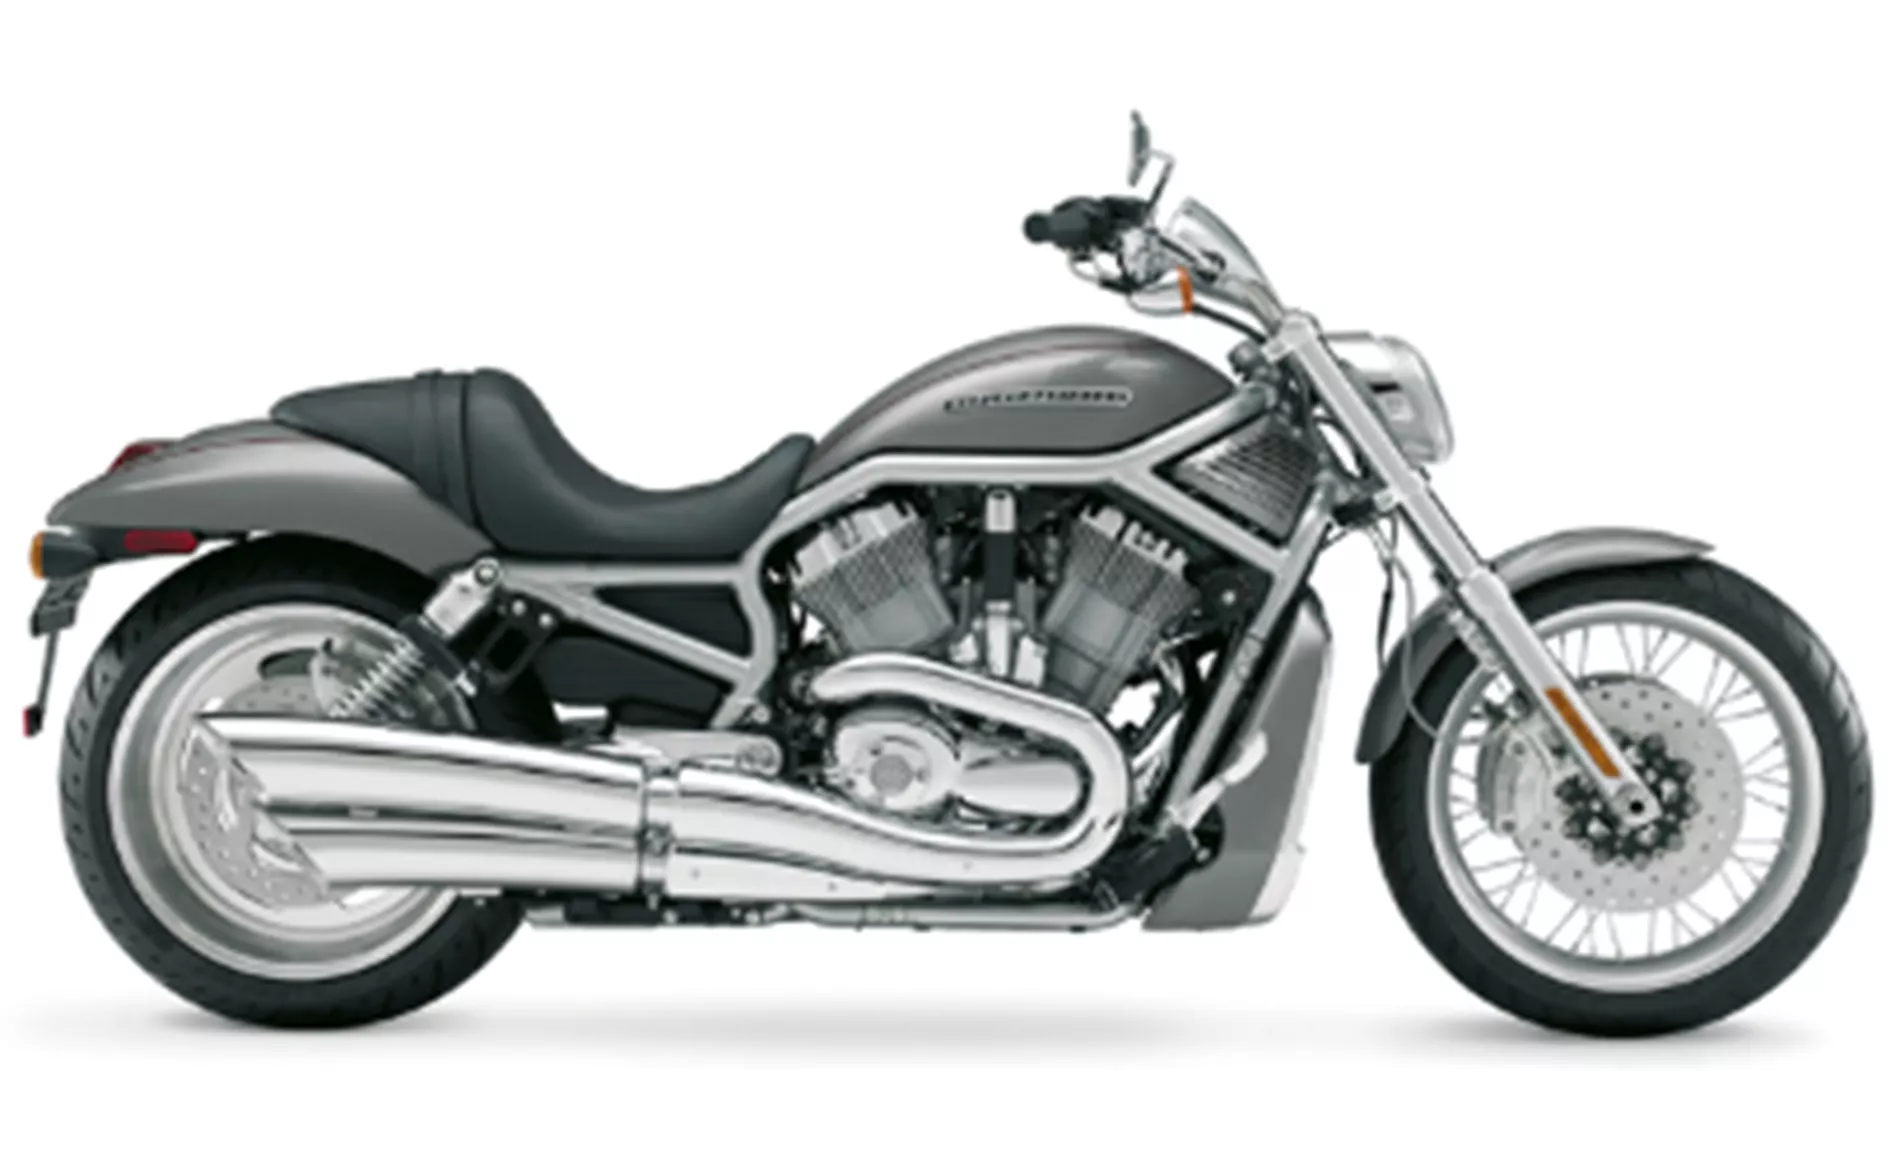 Harley-Davidson V-Rod VRSCA 2008